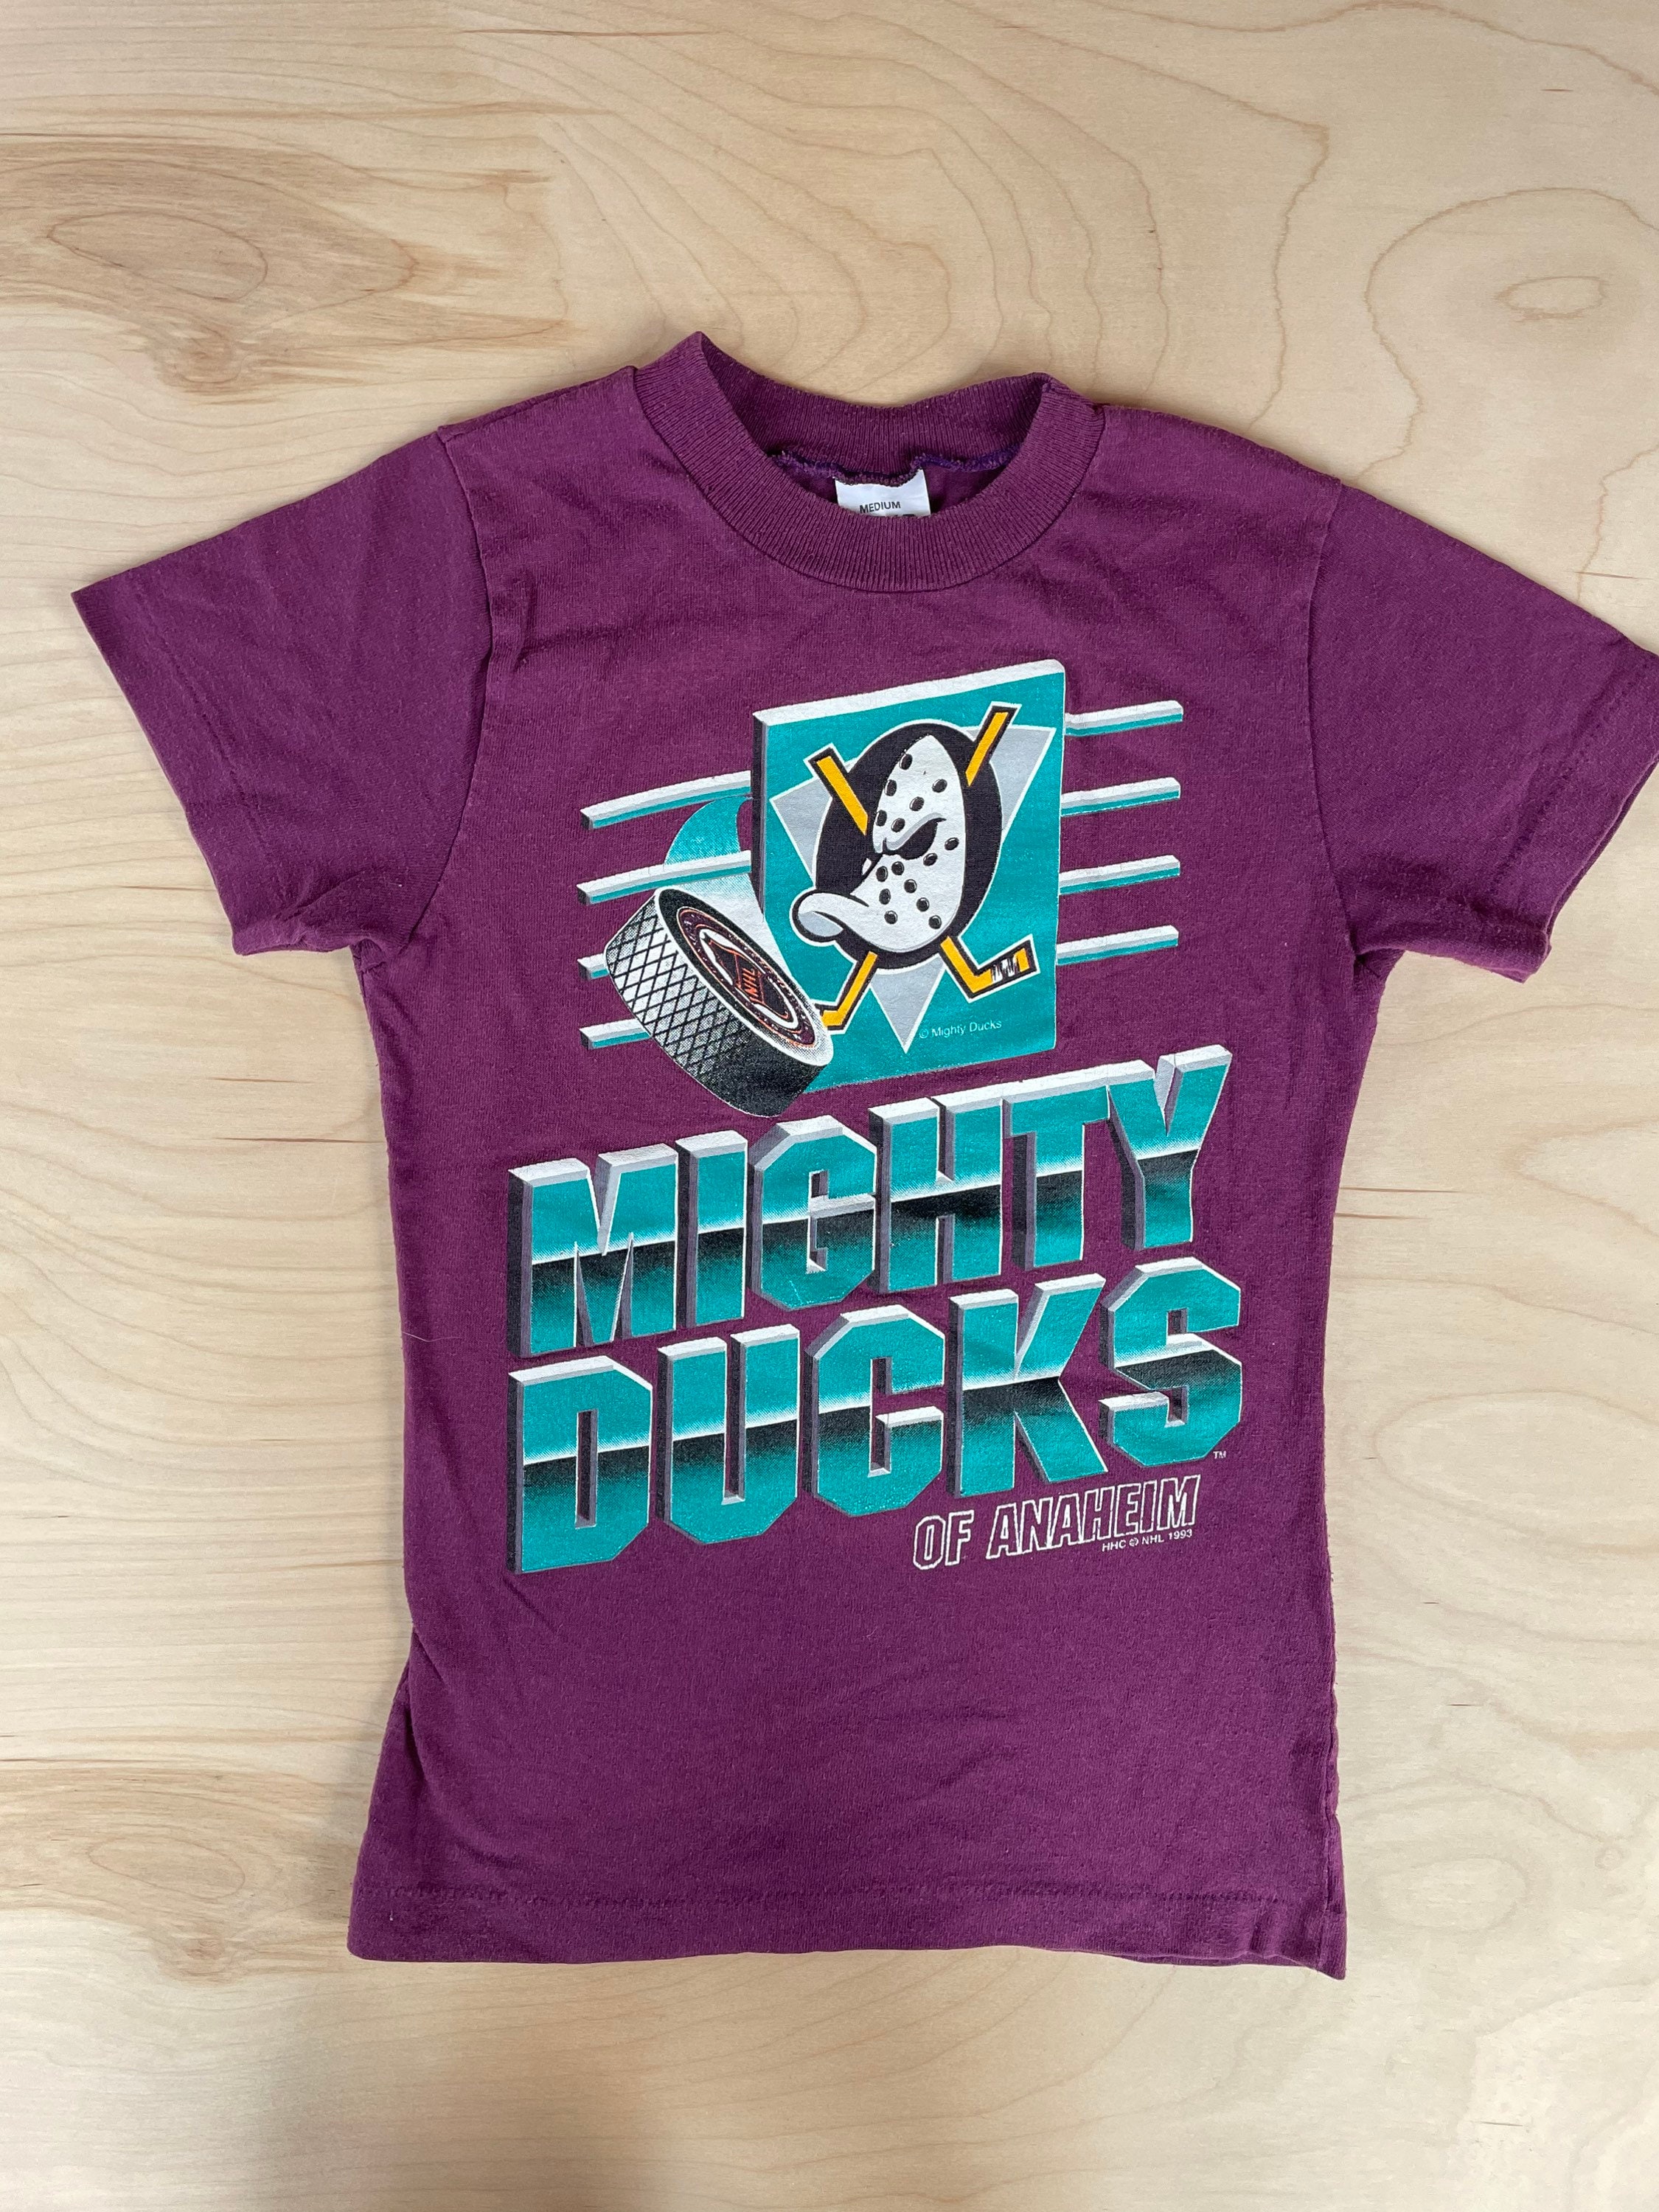 Mighty Ducks Movie Jerseys for sale in Wilmington, North Carolina